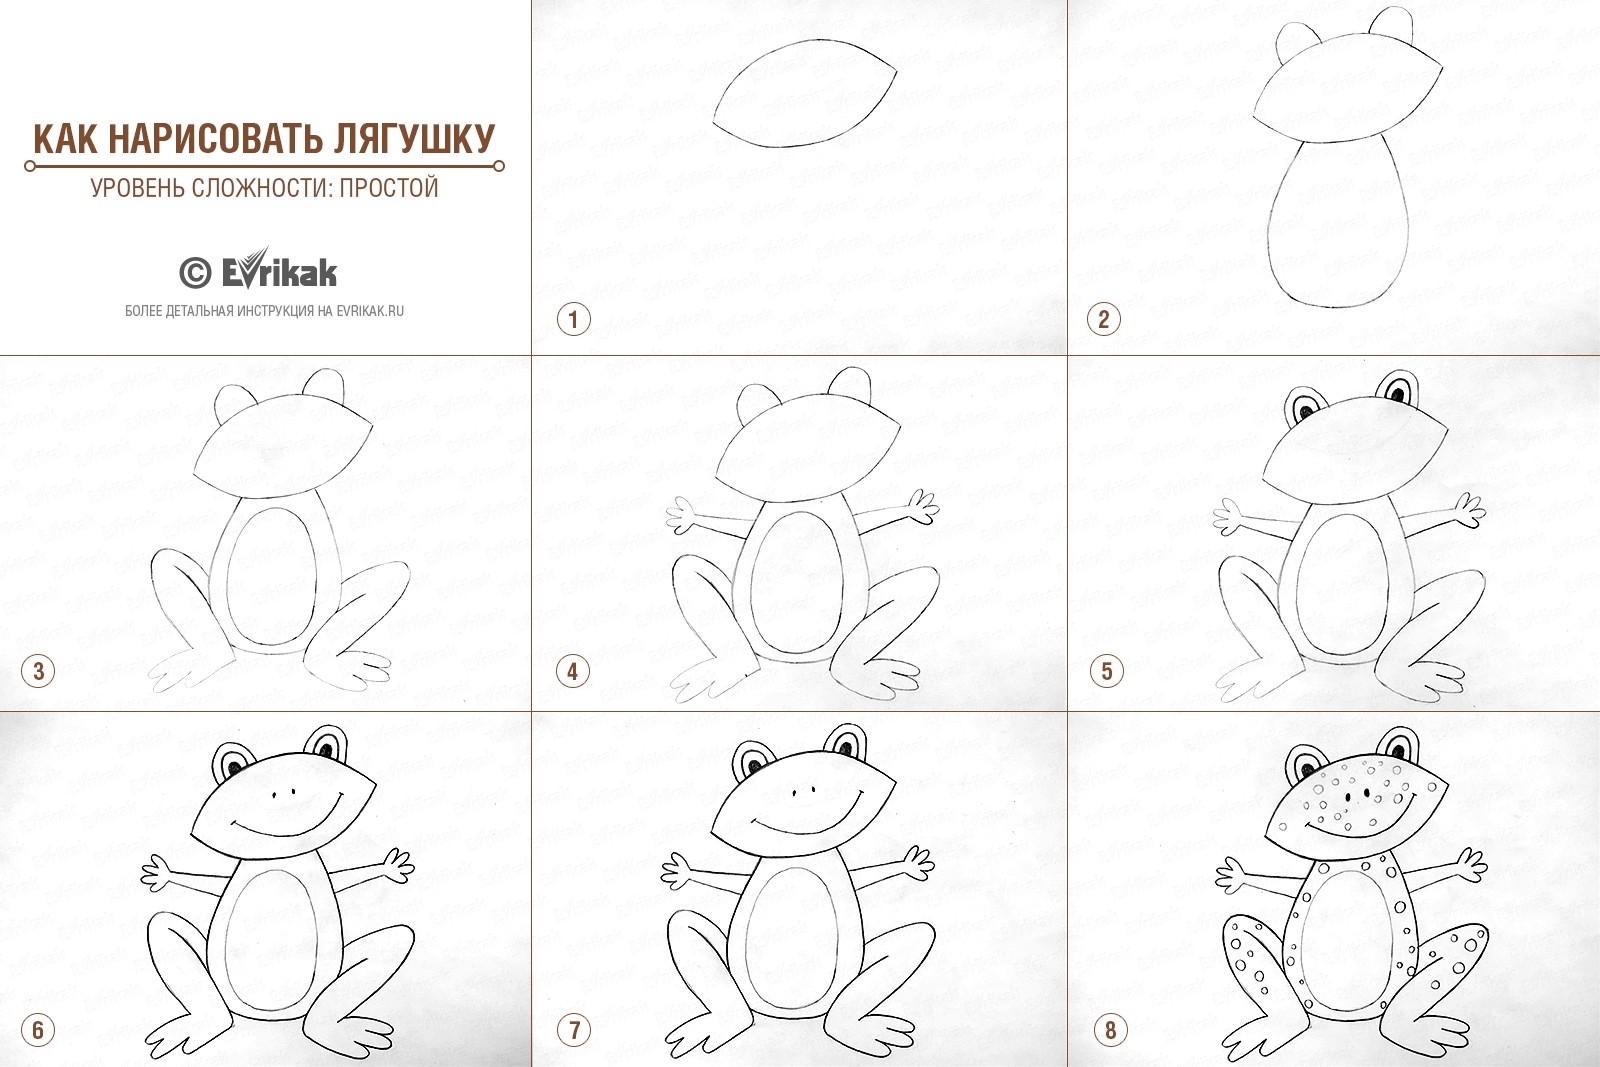 Царевны лягушки поэтапно. Царевна лягушка рисунок пошагово для детей. Как нарисовать царевну лягушку пошагово. Лягушка рисунок для детей пошагово. Нарисовать лягушку пошагово для детей.